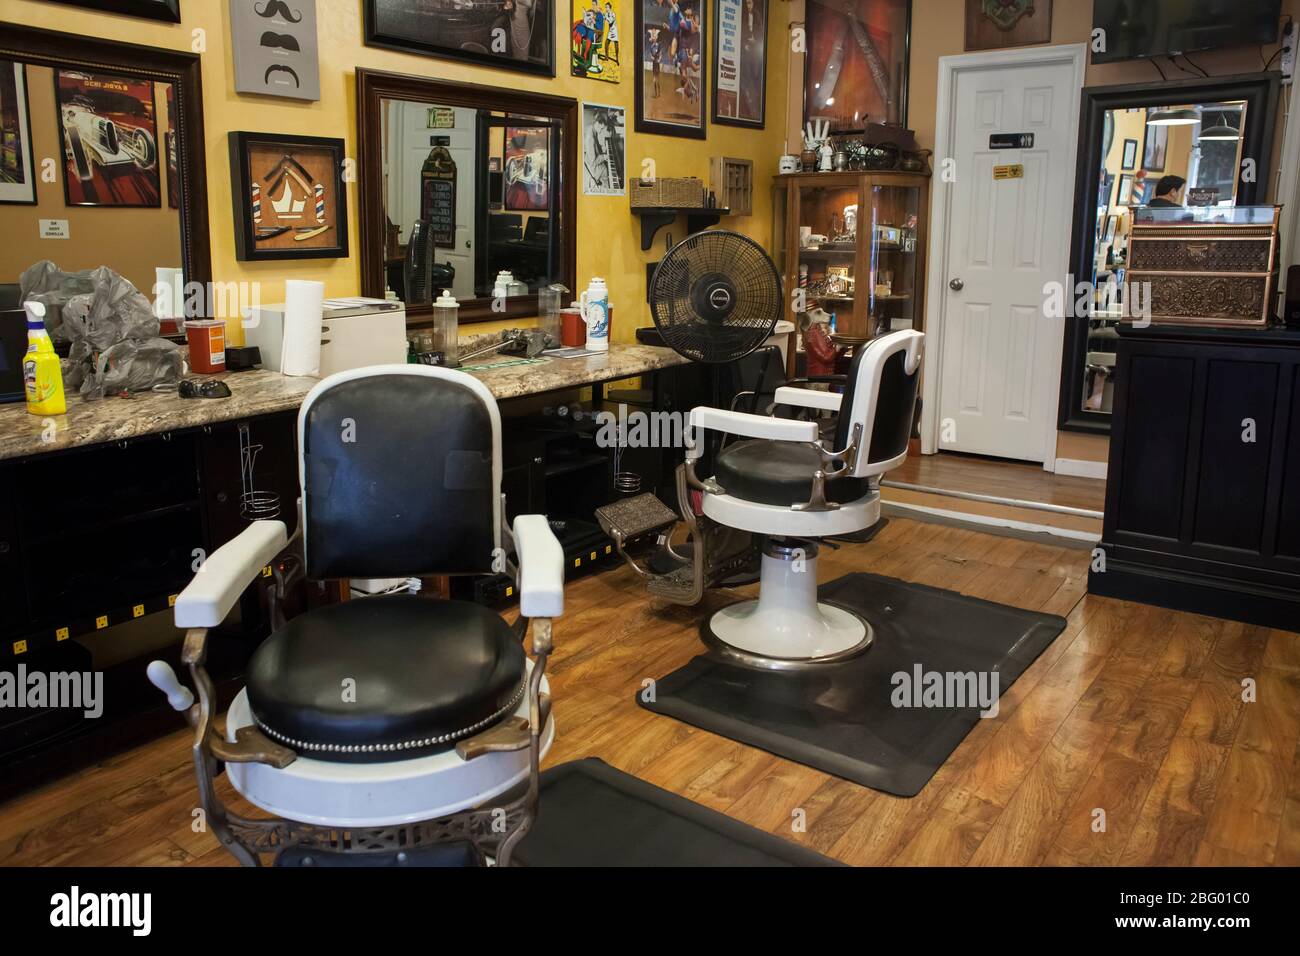 Horizontale Ansicht des King of Shave Barbershop Innenraums in der Pine St, Philadelphia, Pennsylvania Stockfoto